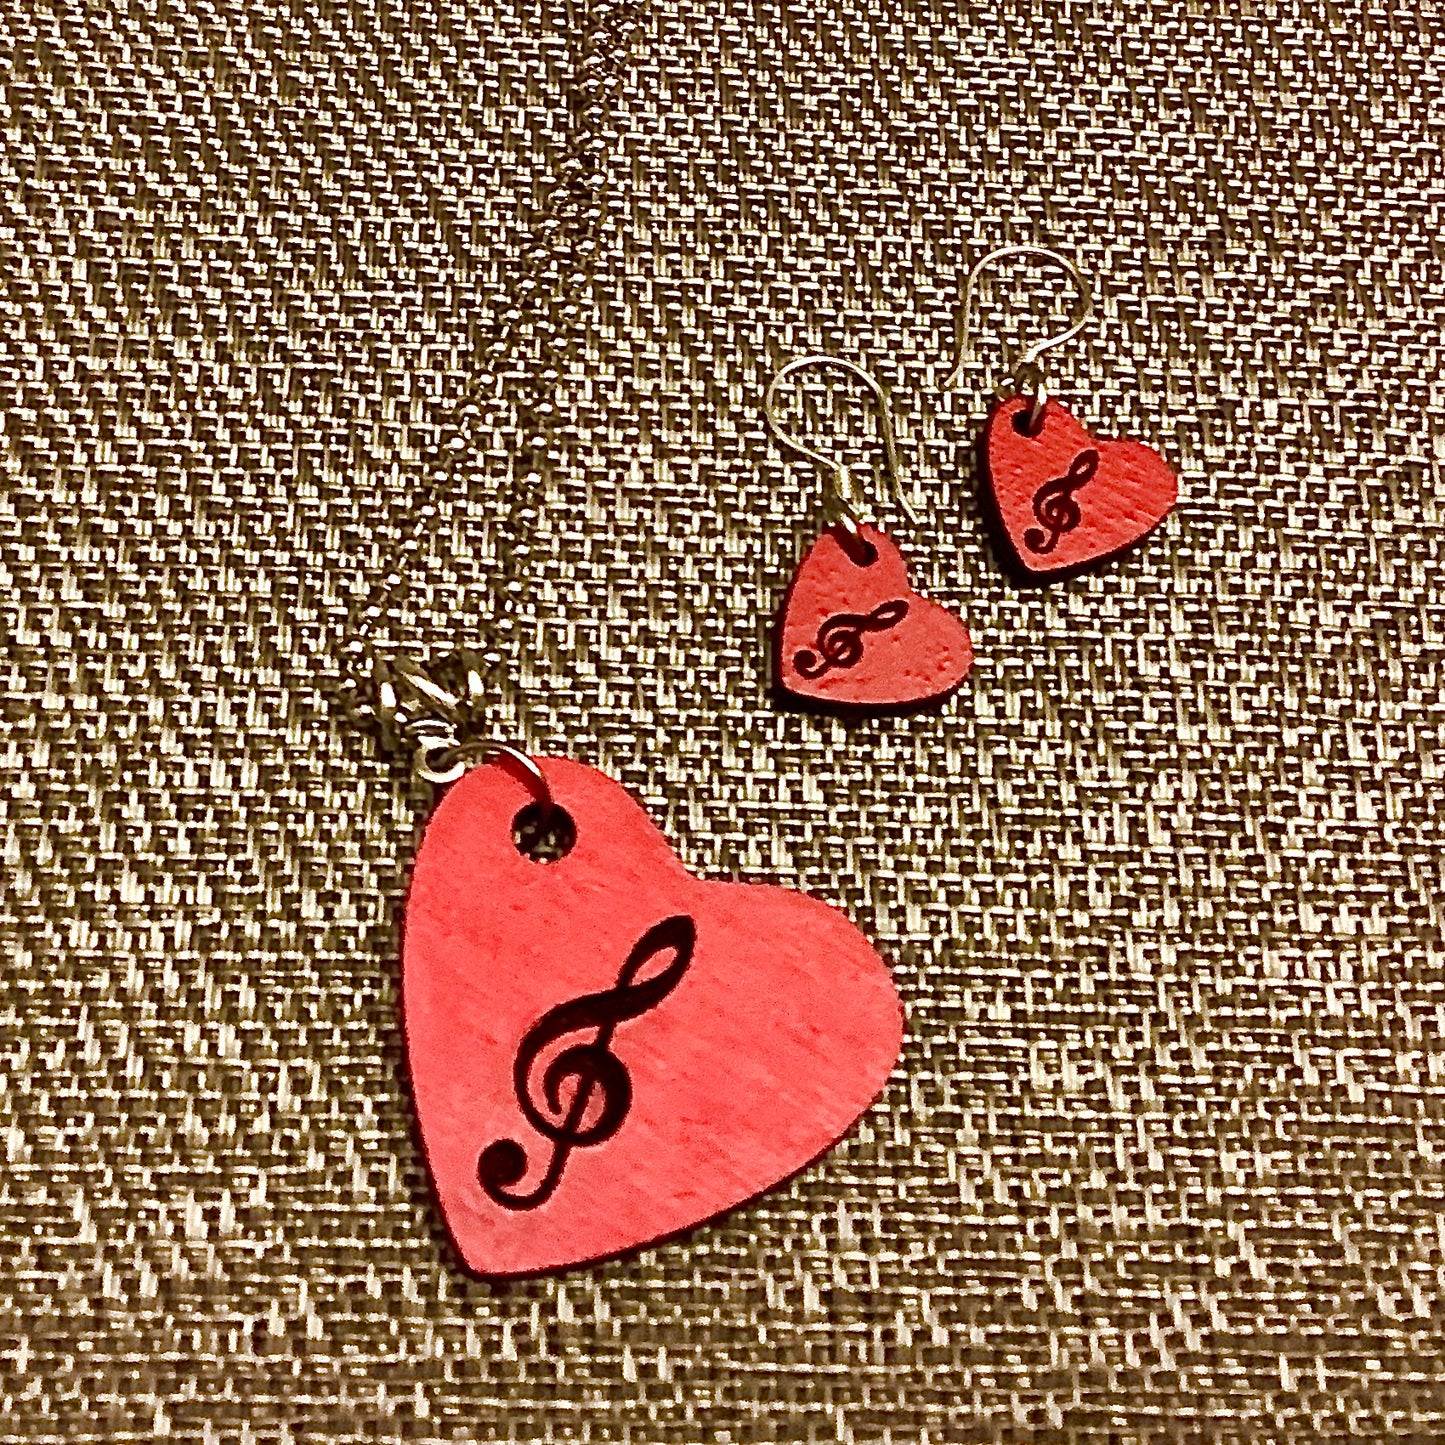 Musical Hearts Pendant and Earrings Set